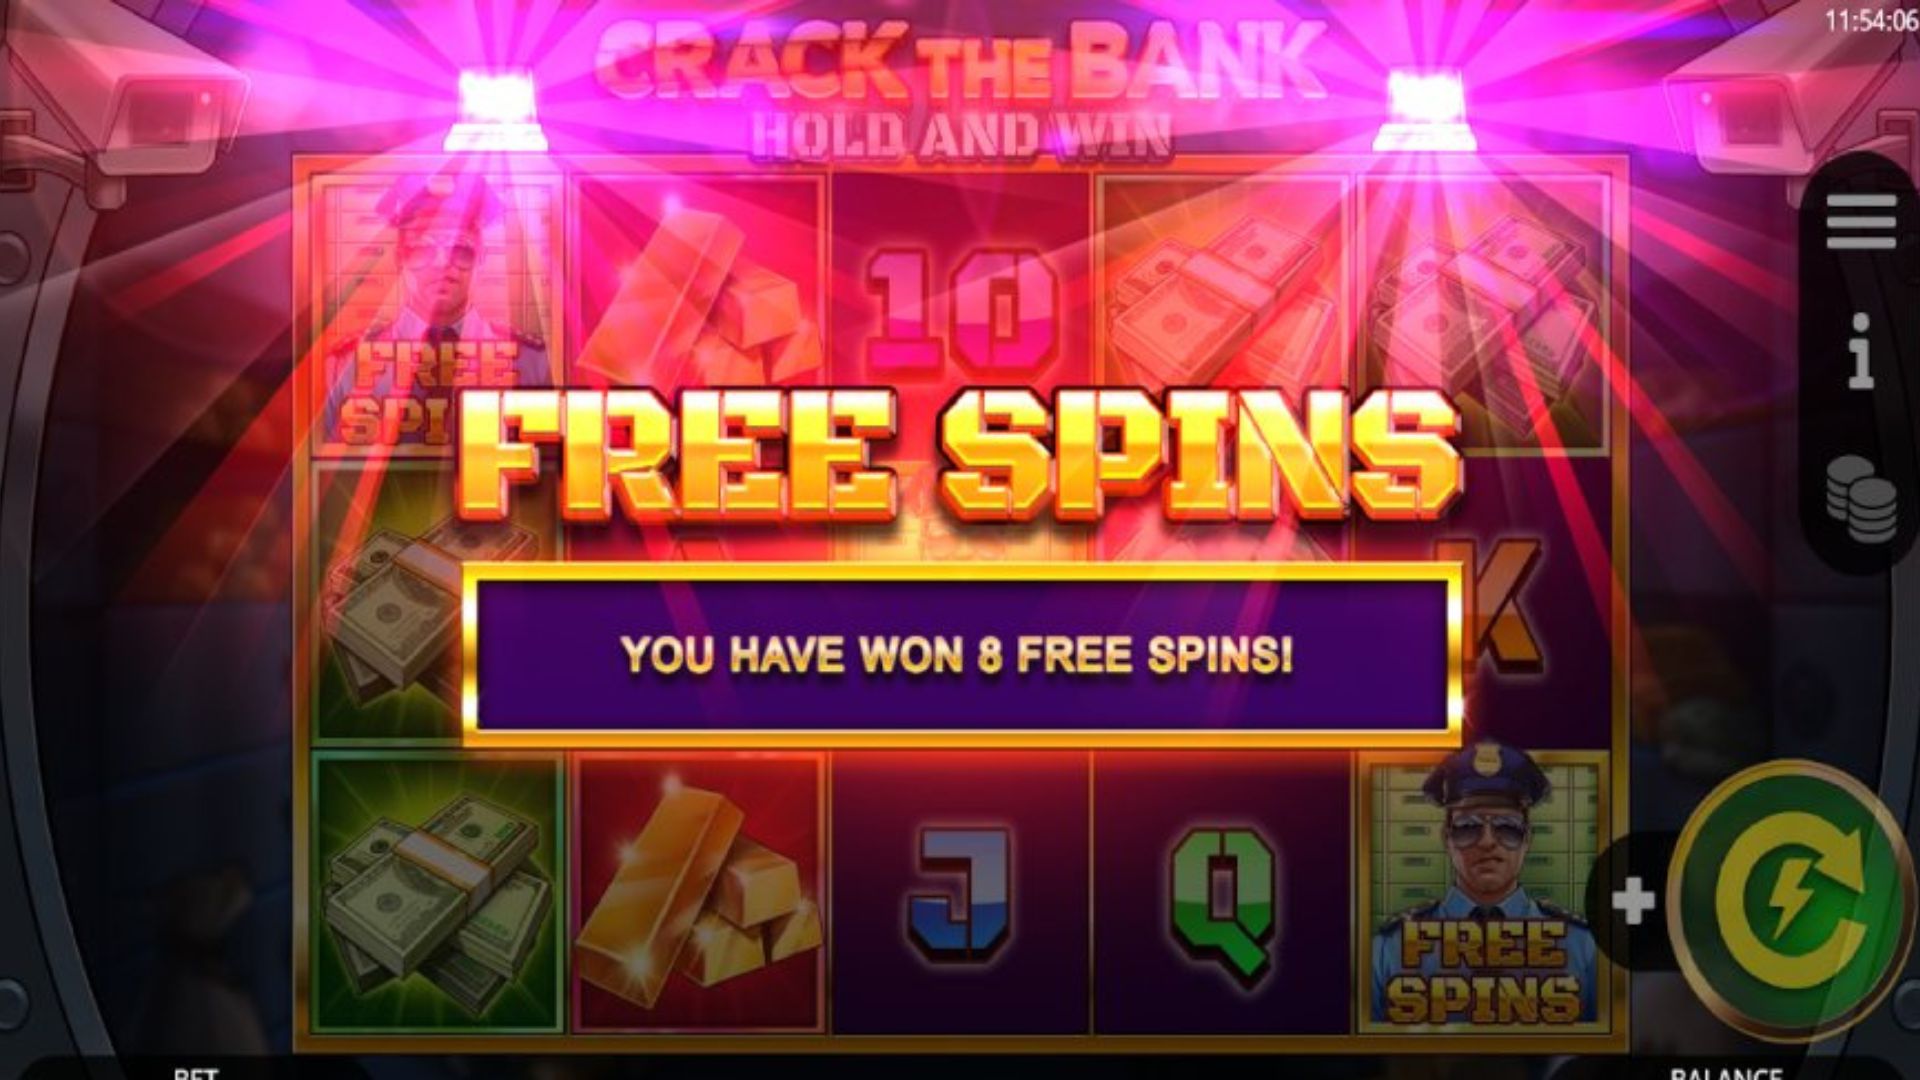 bonus freespin slot crack the bank hold and win